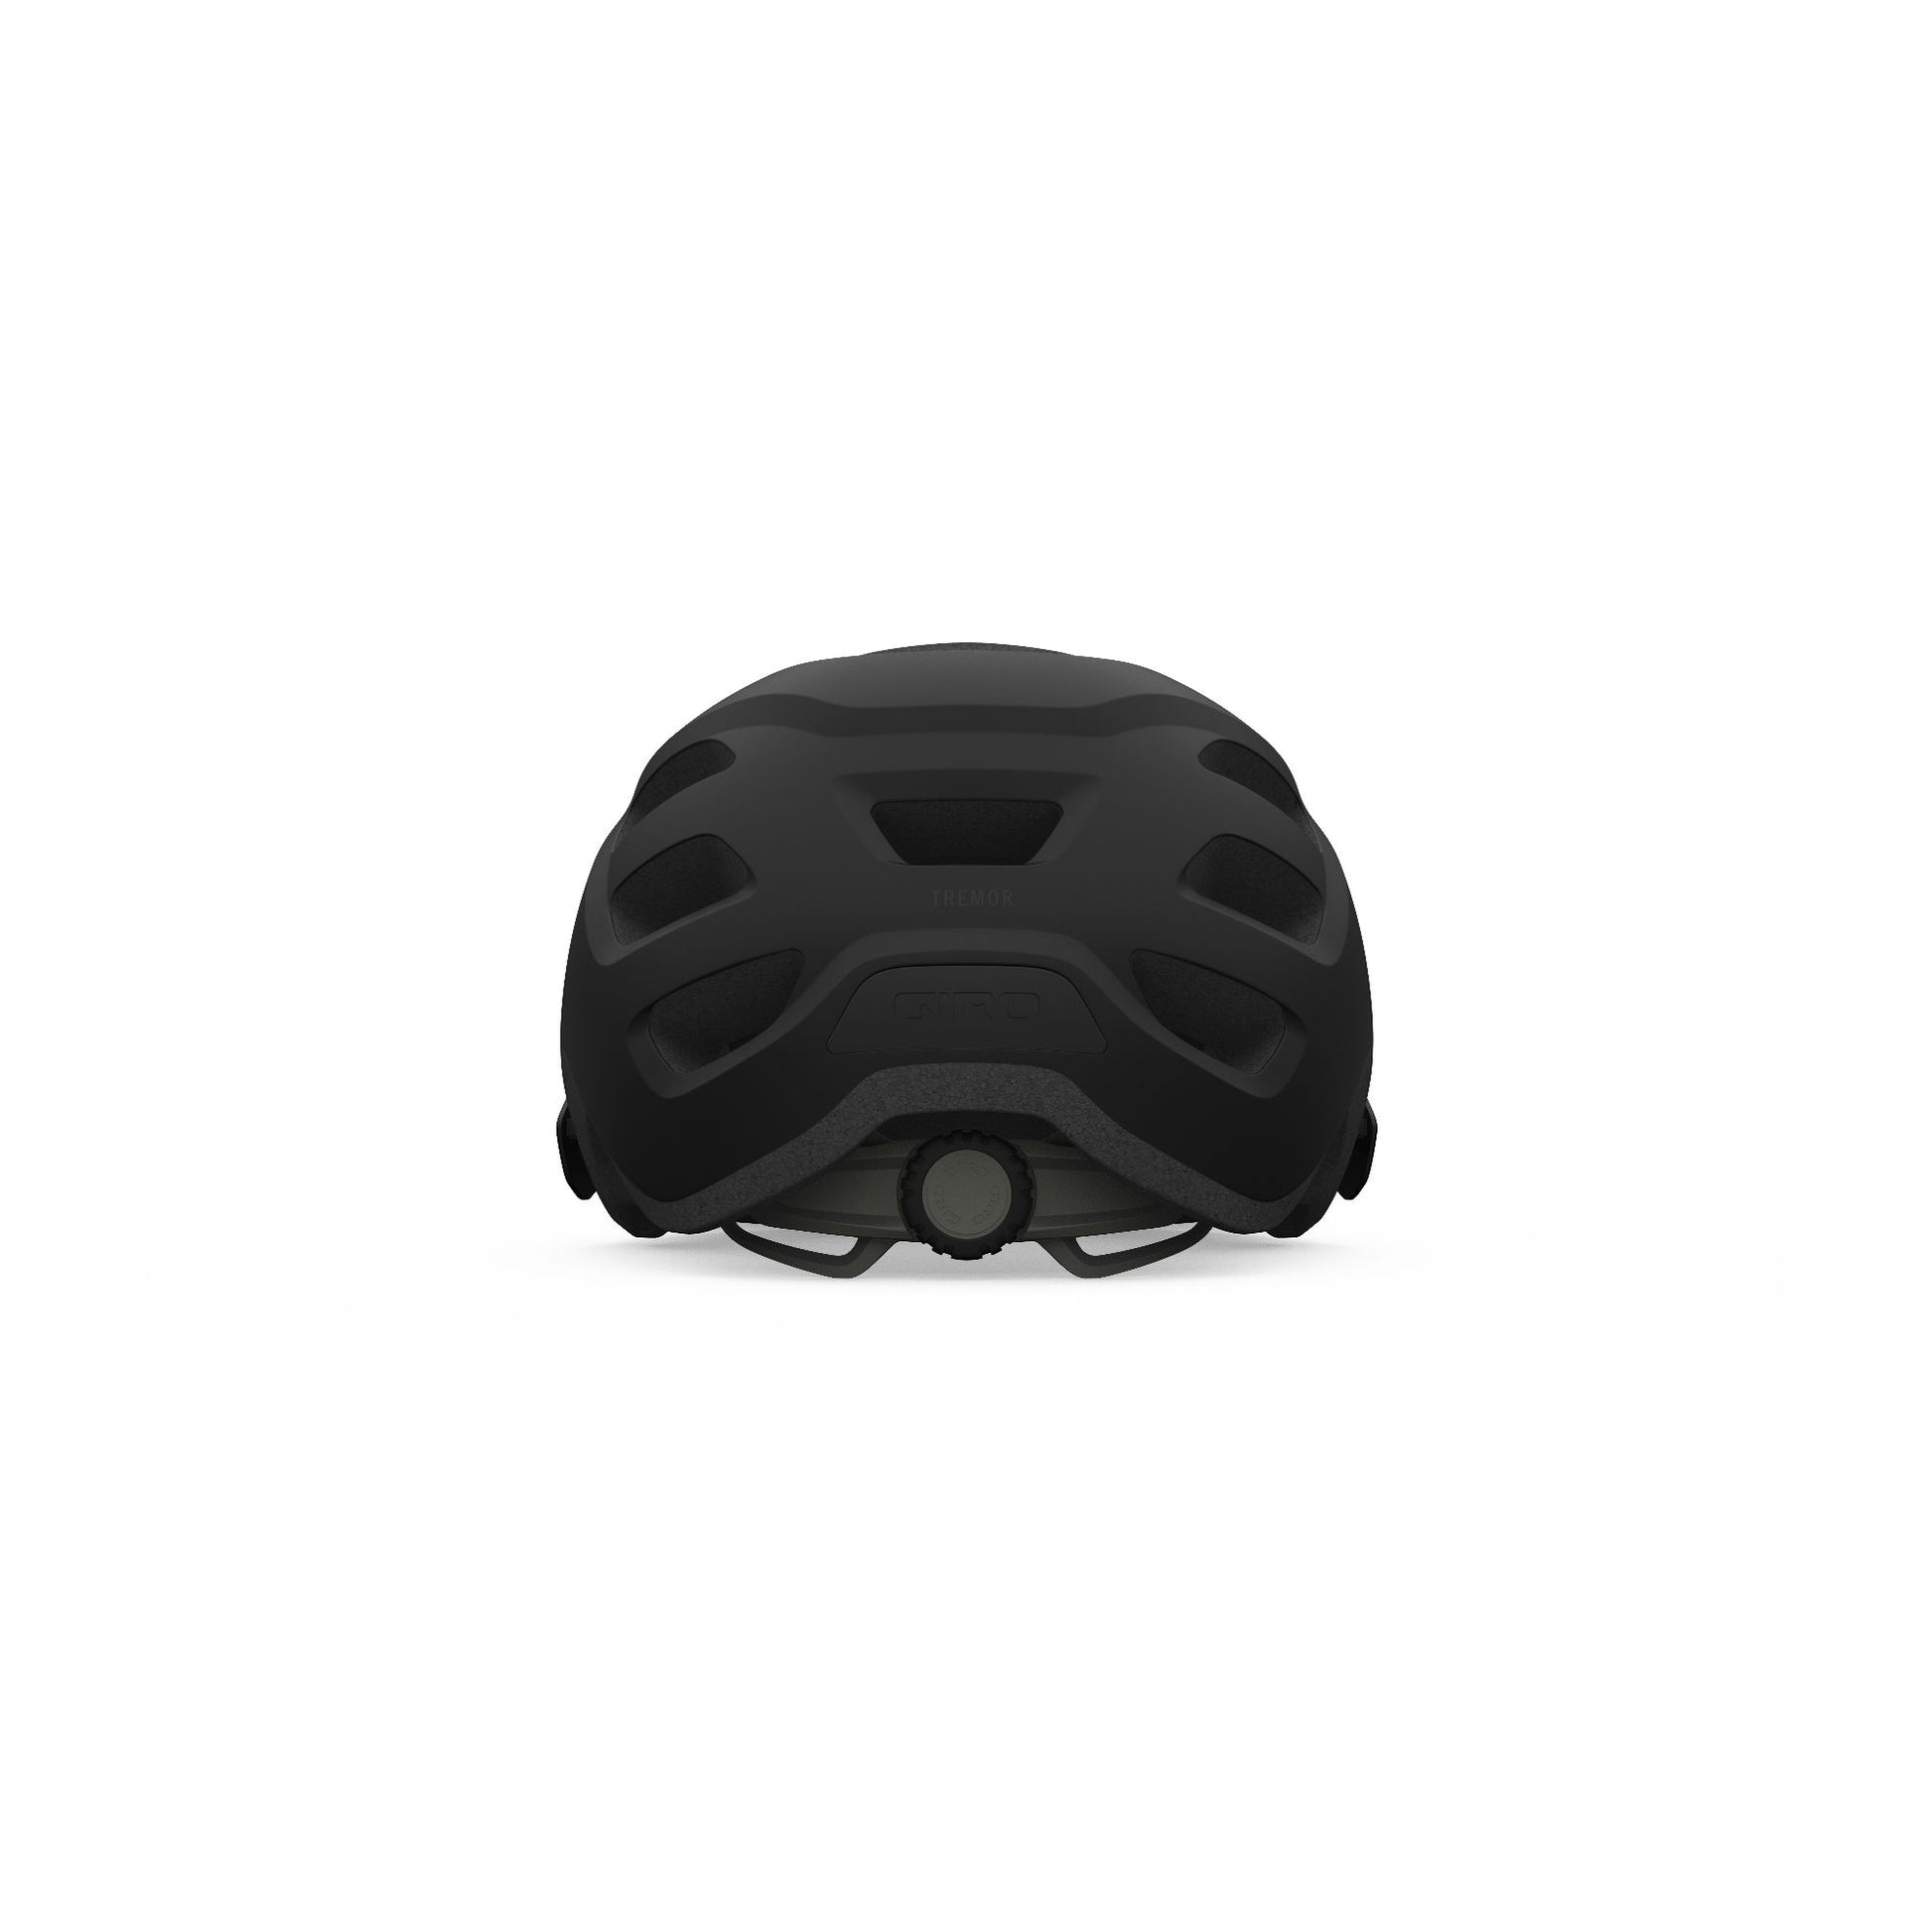 Giro Youth Tremor Helmet Matte Black UC Bike Helmets